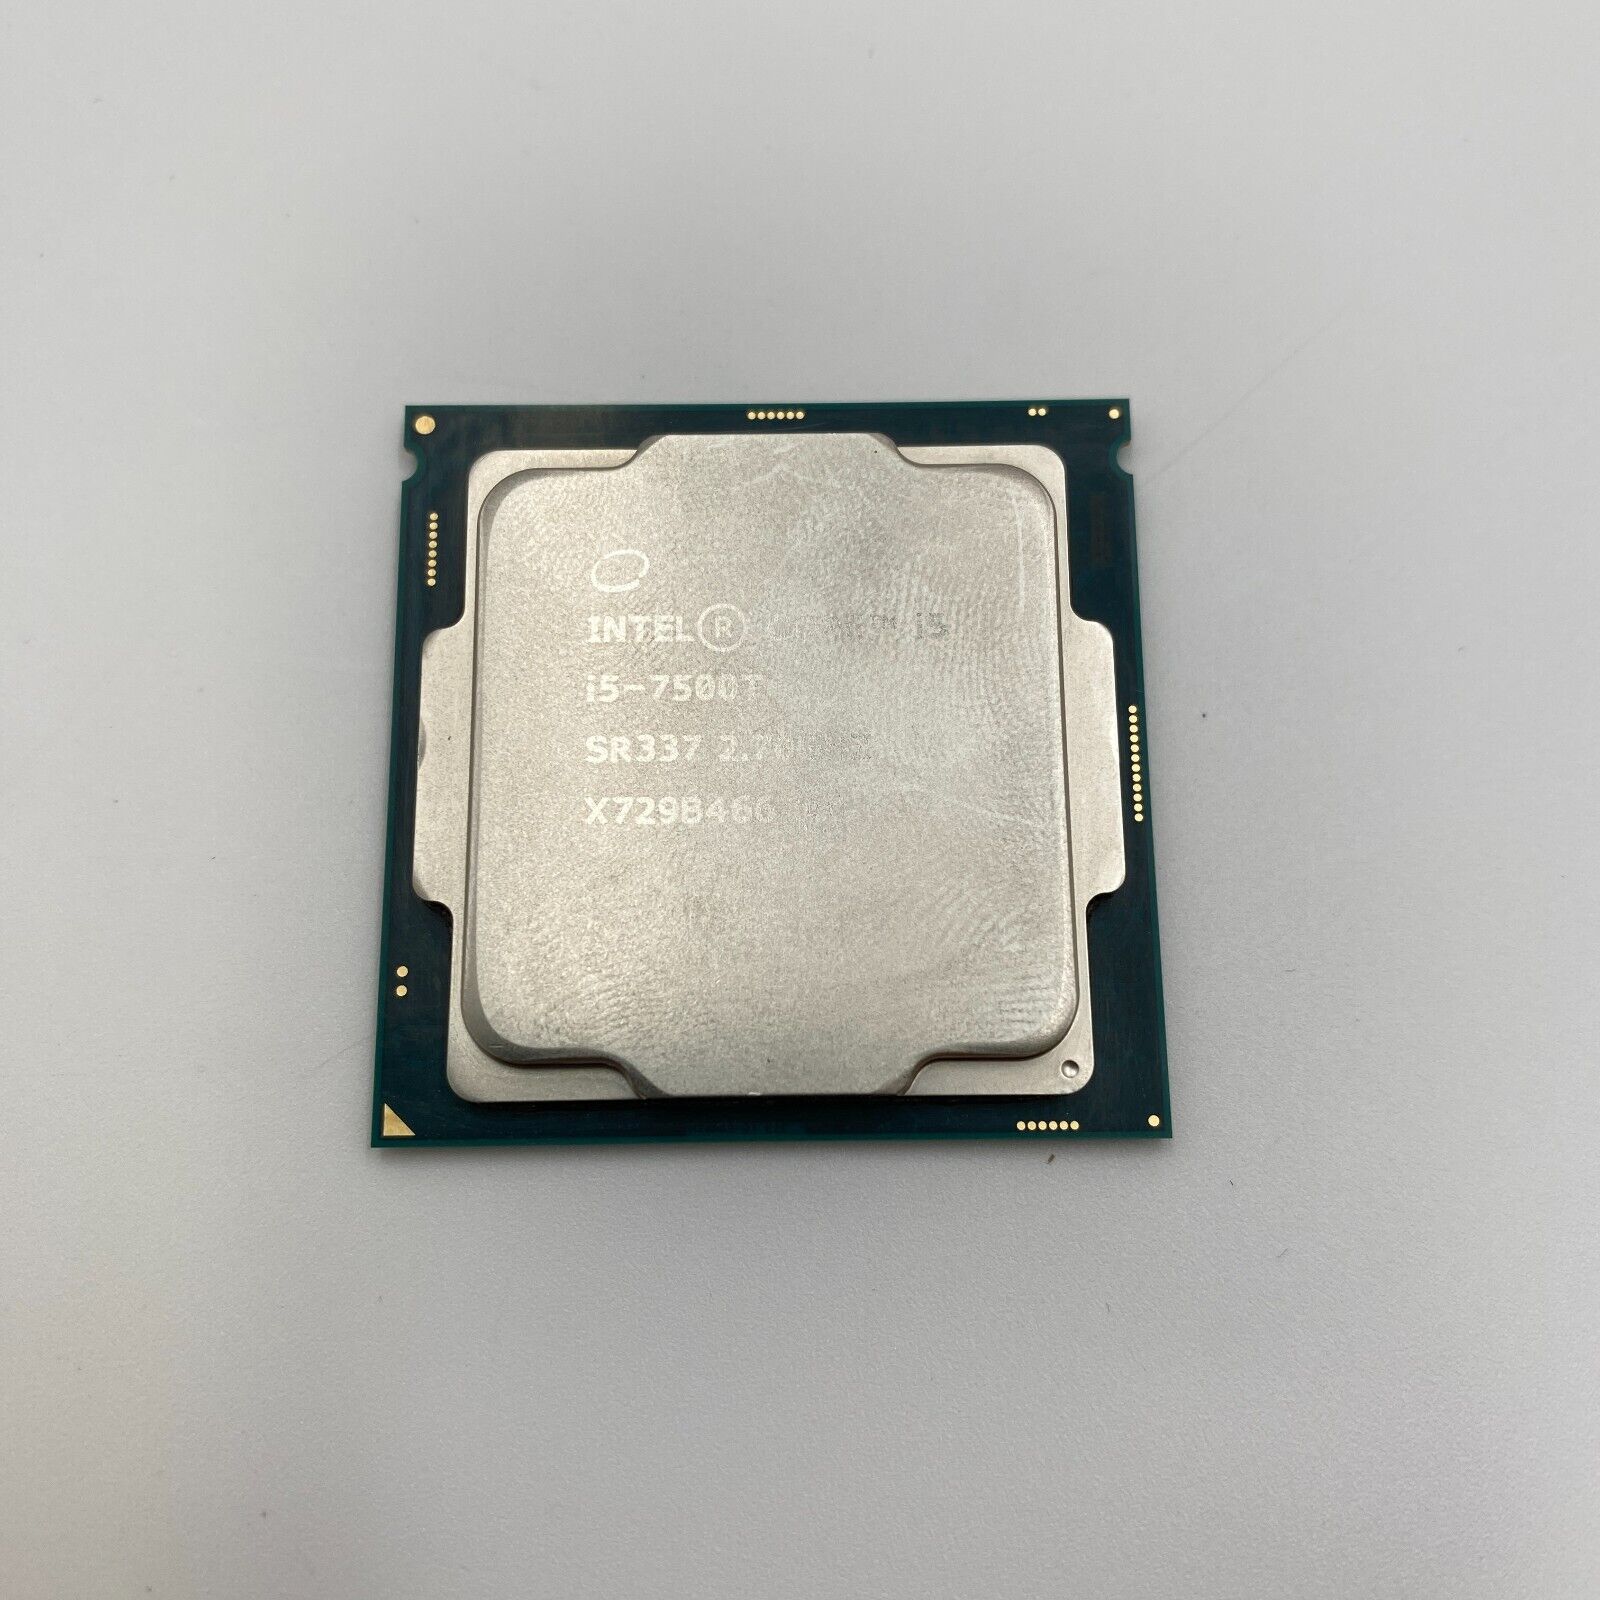 Intel Core i5-7500T Desktop Processor (2.7 GHz, 4 Cores, LGA 1151) Kaby Lake